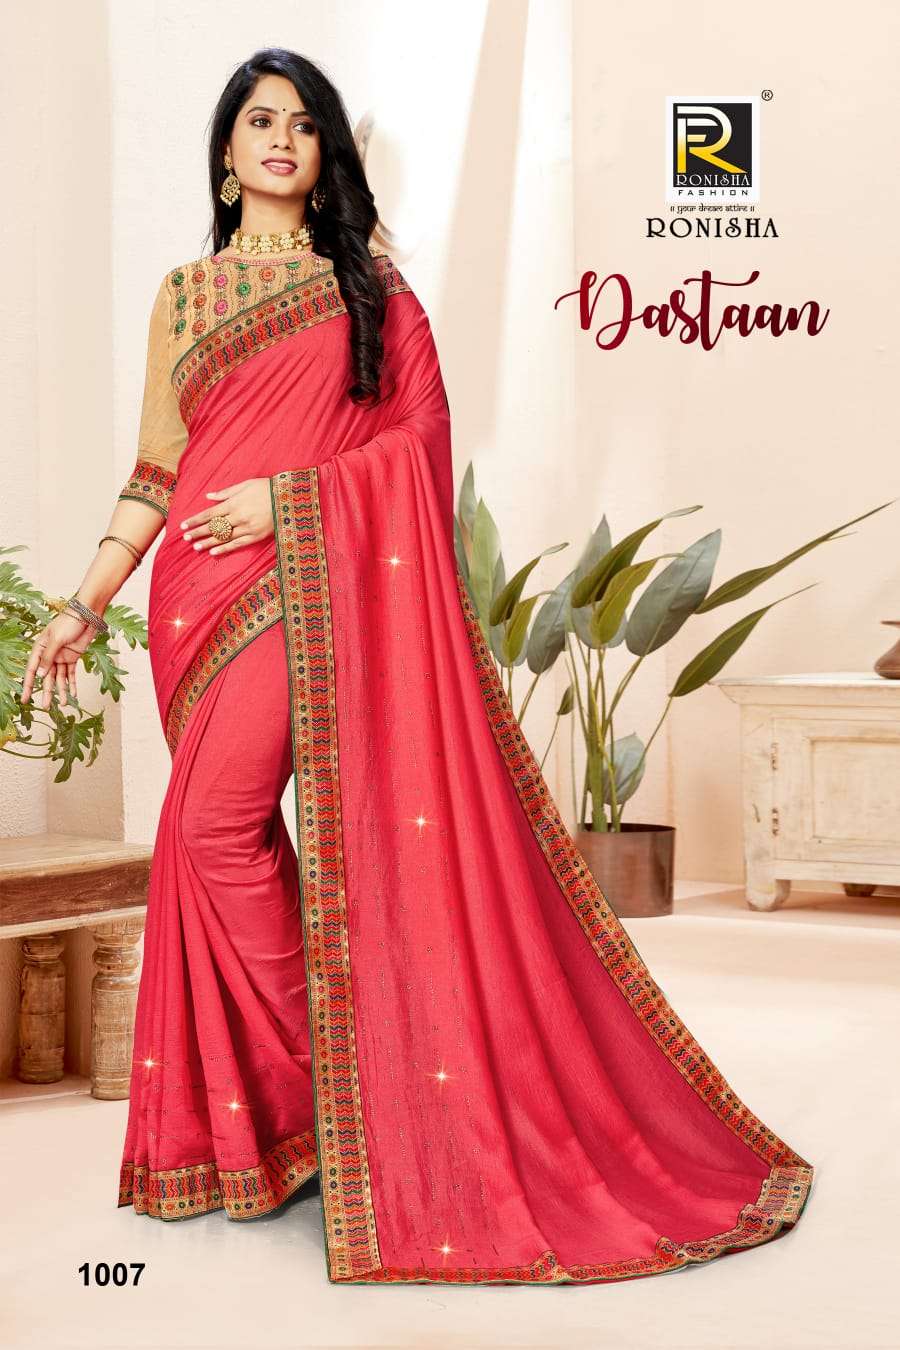 Ronisha Dastaan Festive Wear Vichitra Silk Sarees Catalog